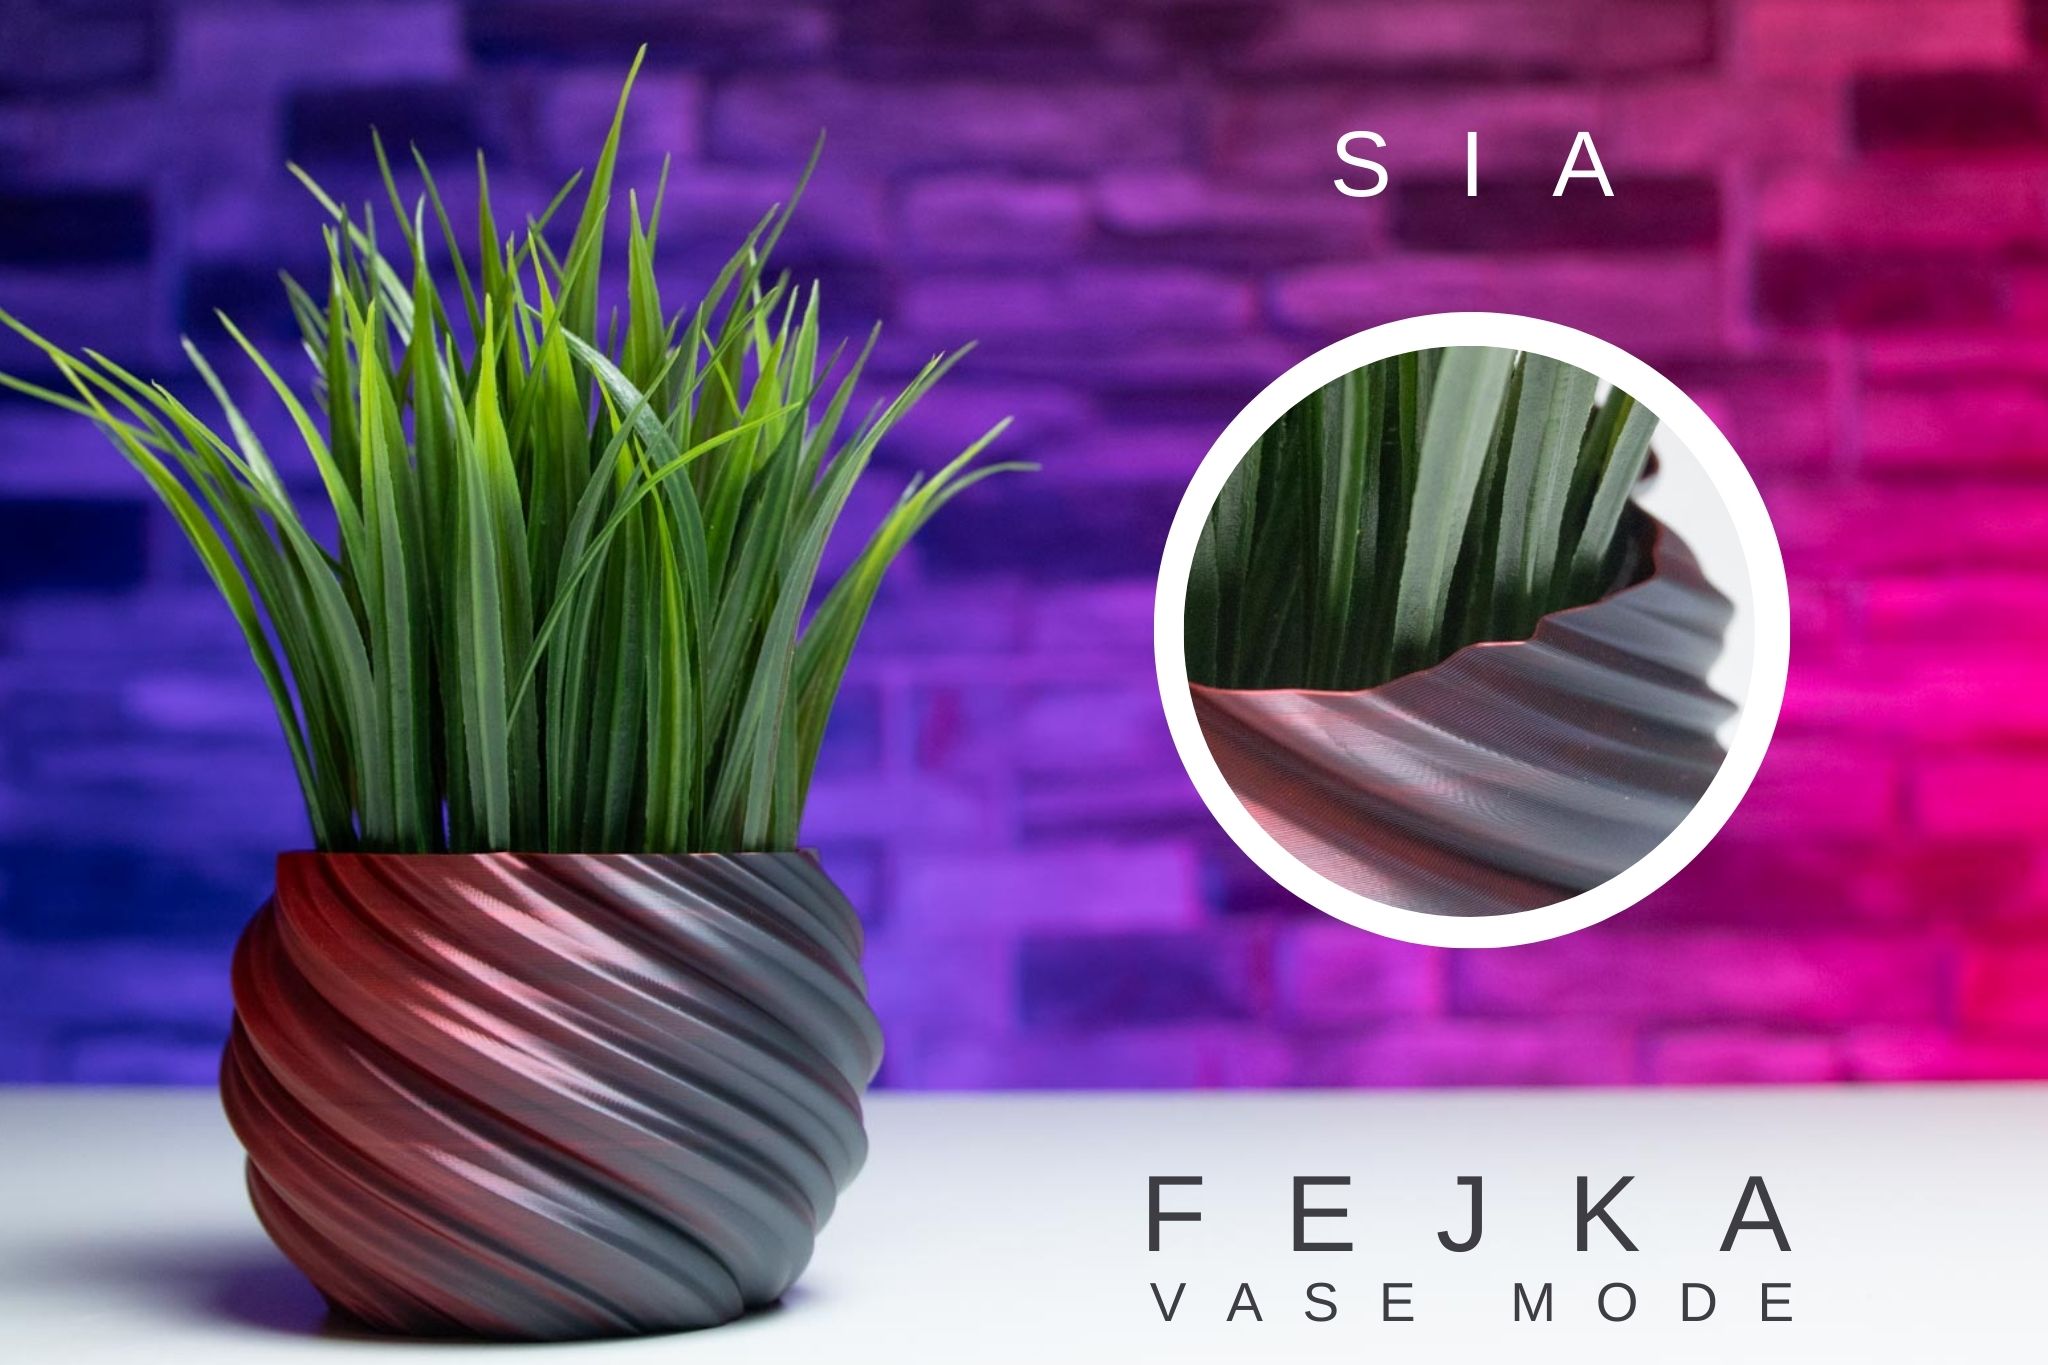 3D Printed Planter and Pot for Ikea Fejka - Vase SIA